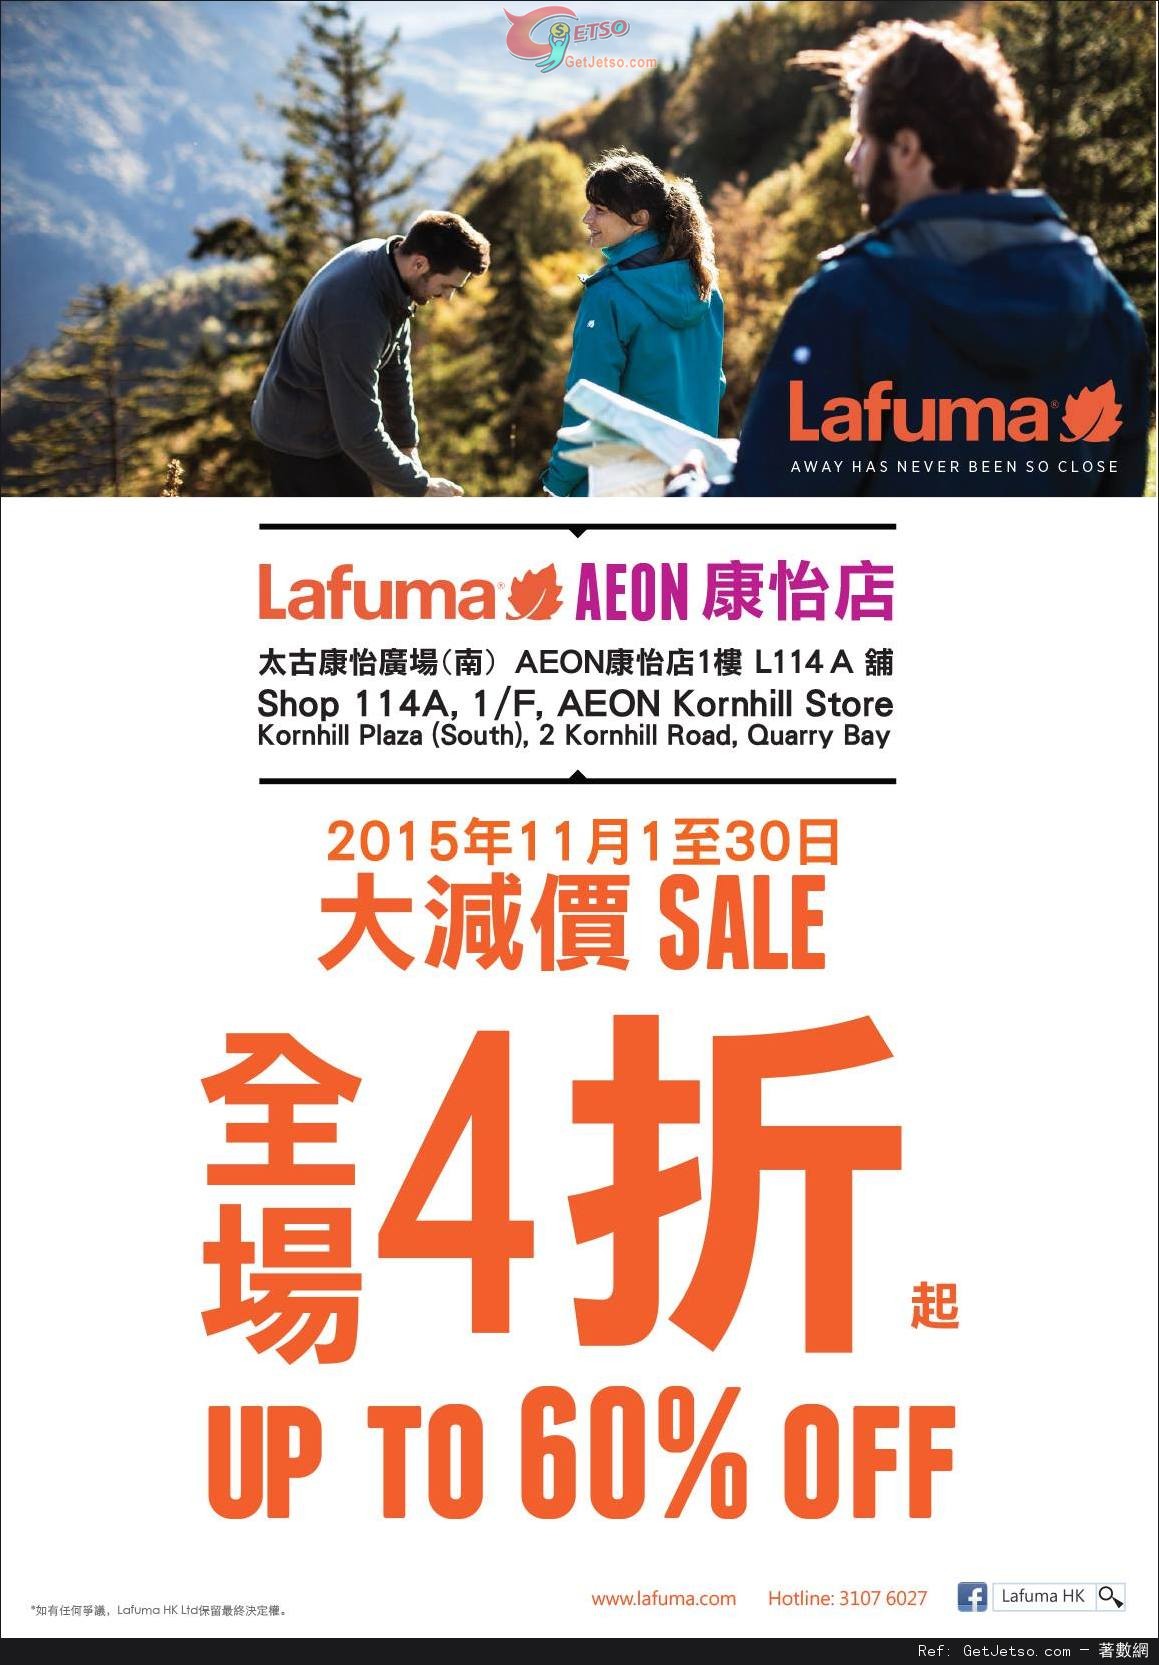 Lafuma AEON 康怡店大減價全場低至4折優惠(至15年11月30日)圖片1